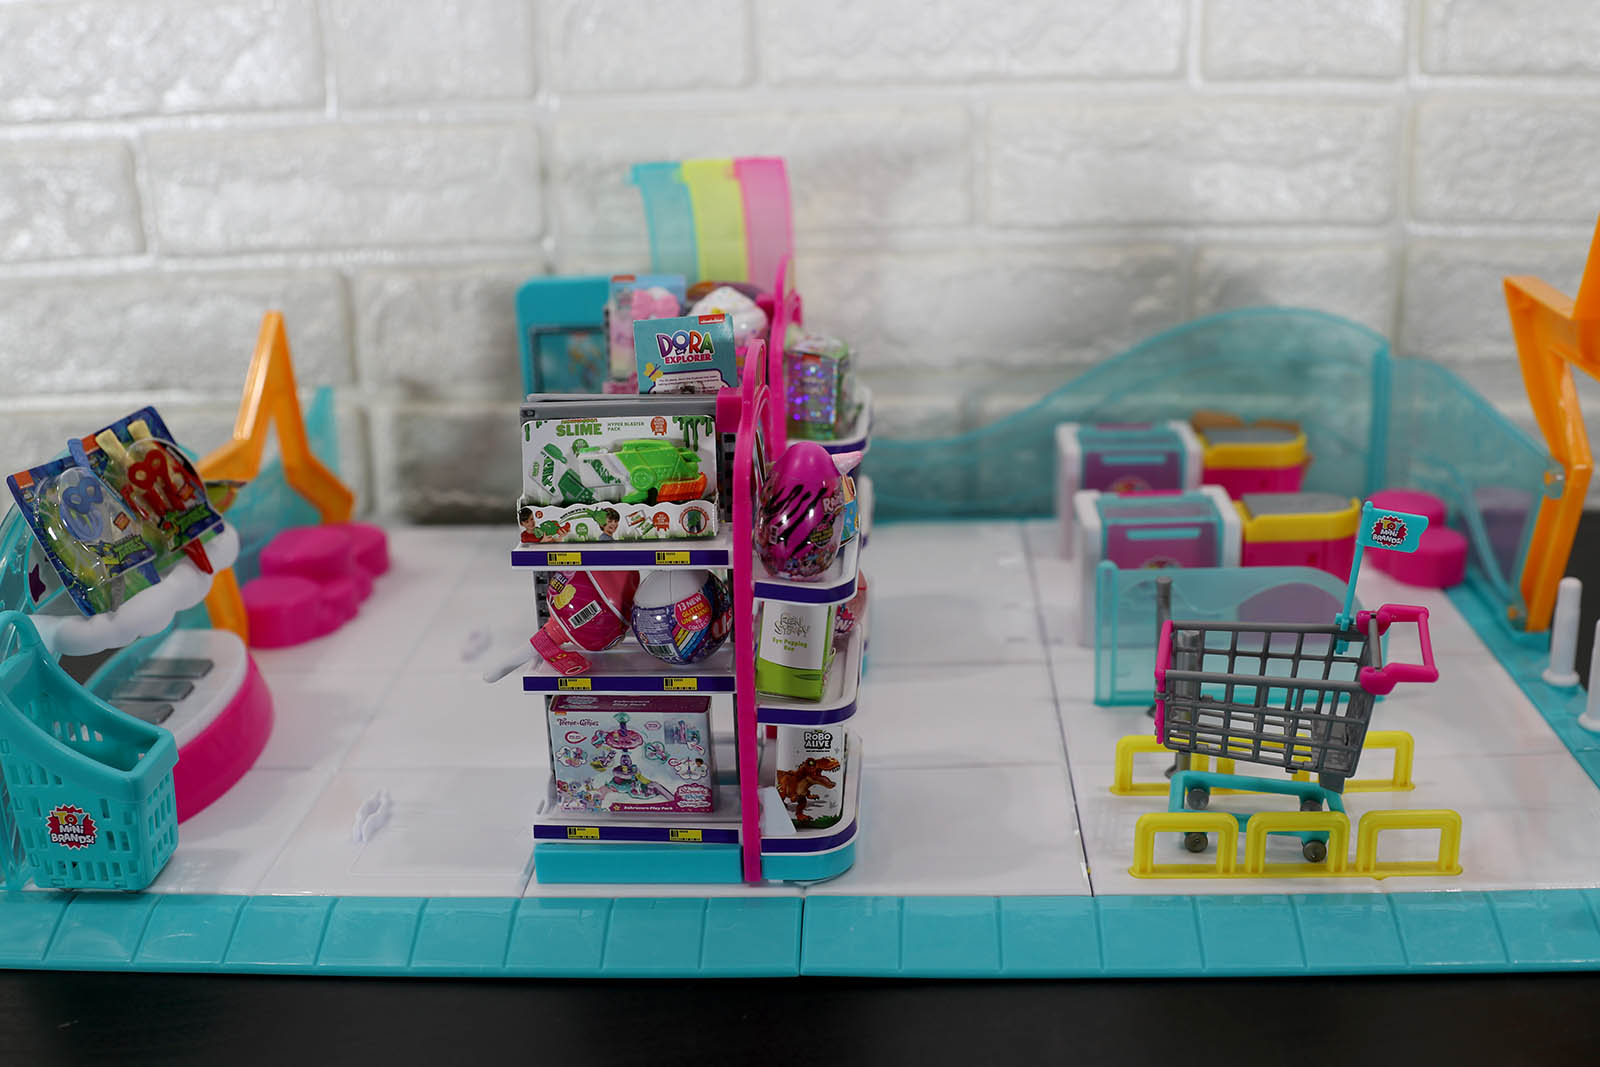 5 Surprise Toy Mini Brands Mini Toy Shop Playset by ZURU 